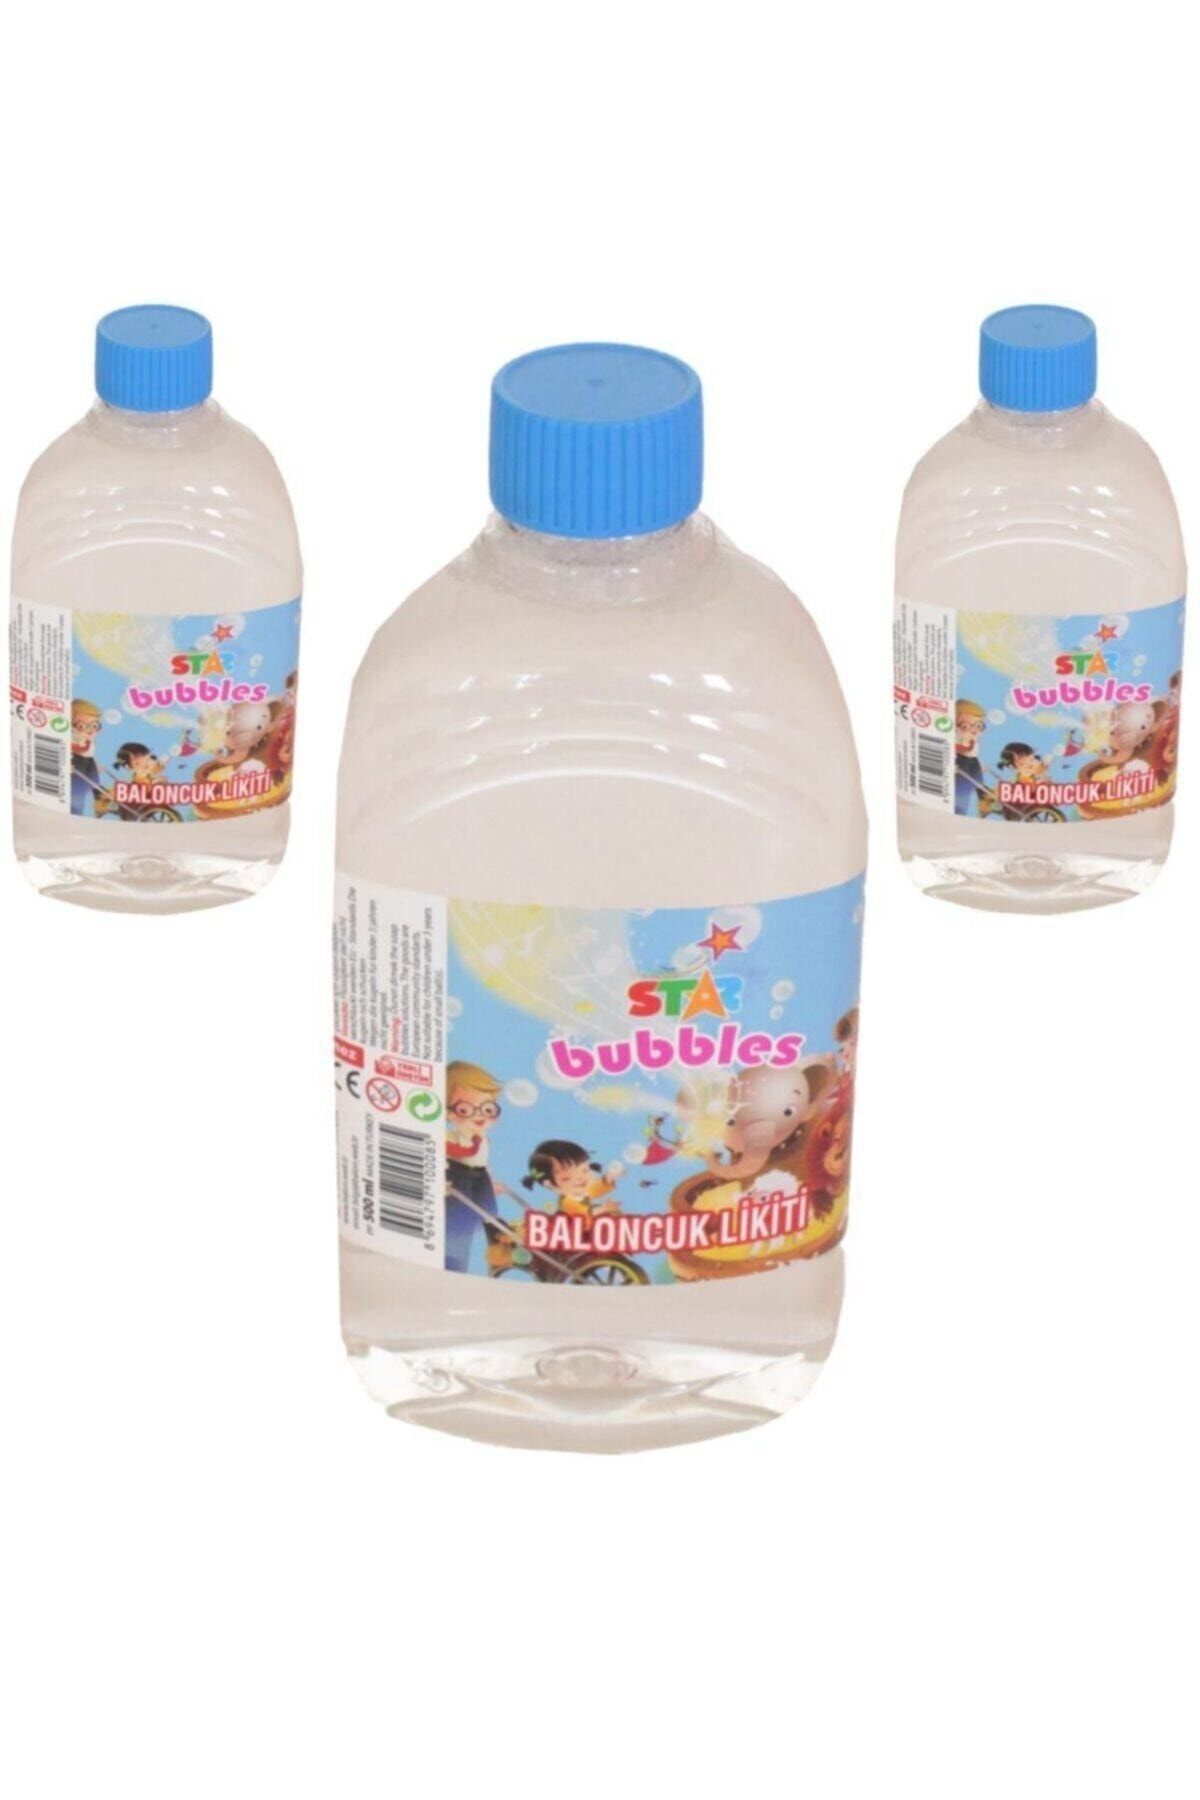 Star Bubbles Köpük 3 Adet Baloncuk Likiti Yedek Baloncuk Solüsyon 500 ml